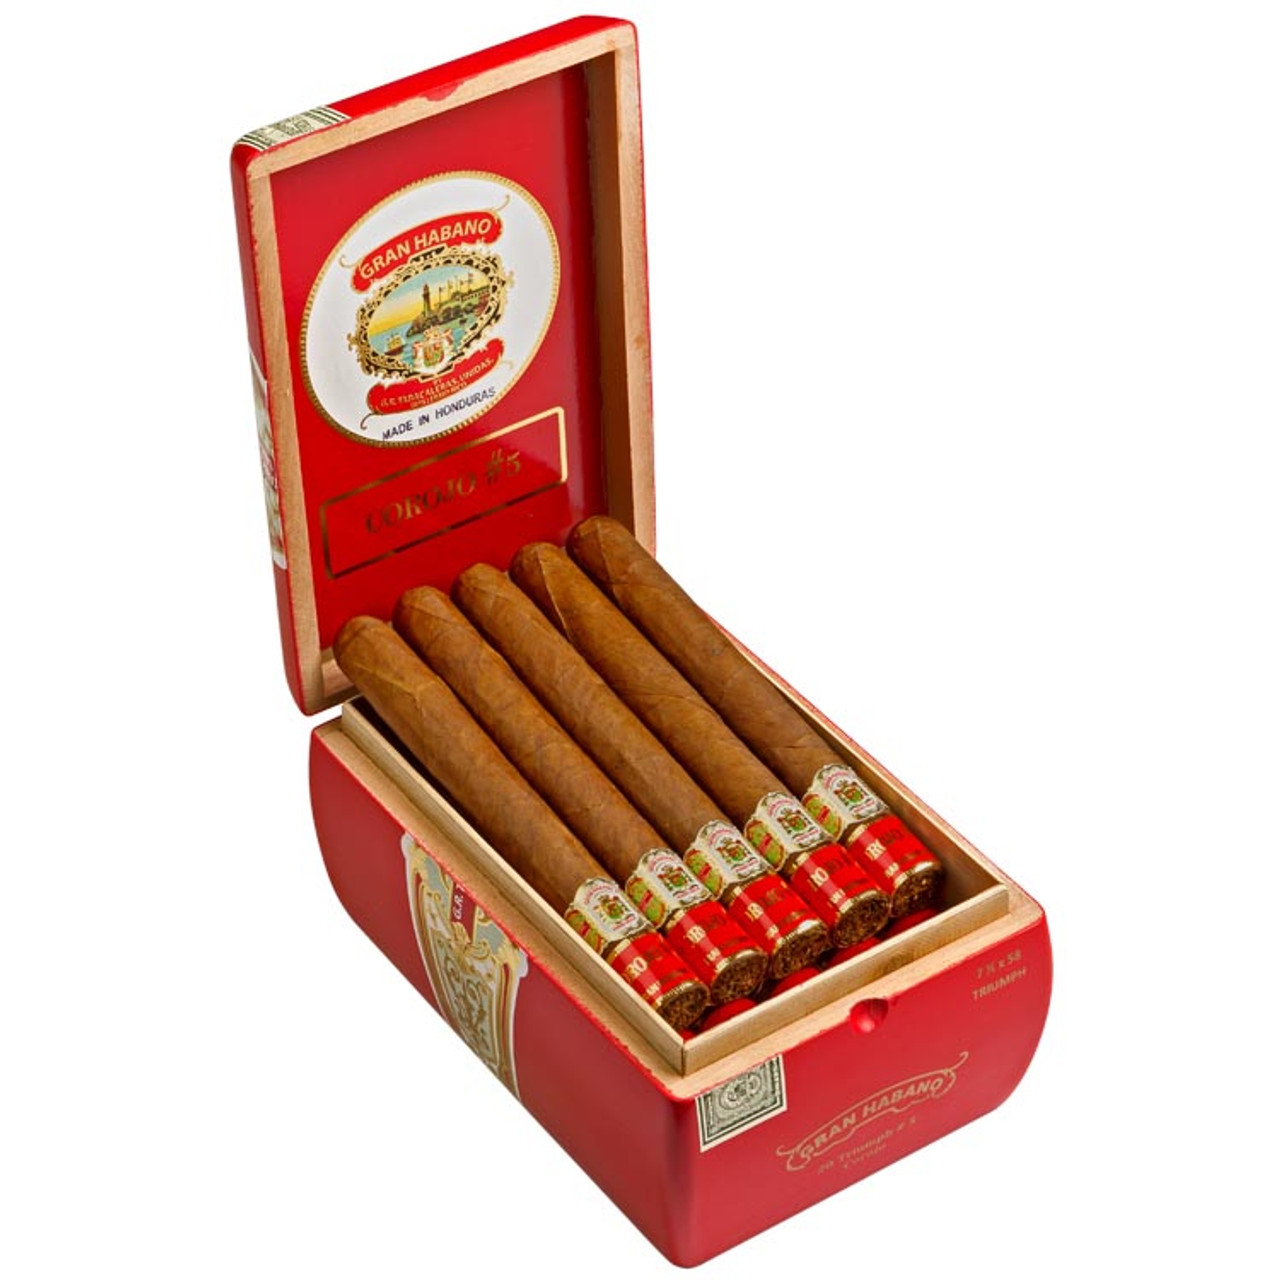 Gran Habano #5 Corojo Triumph Cigars - 7.5 x 58 (Box of 20)